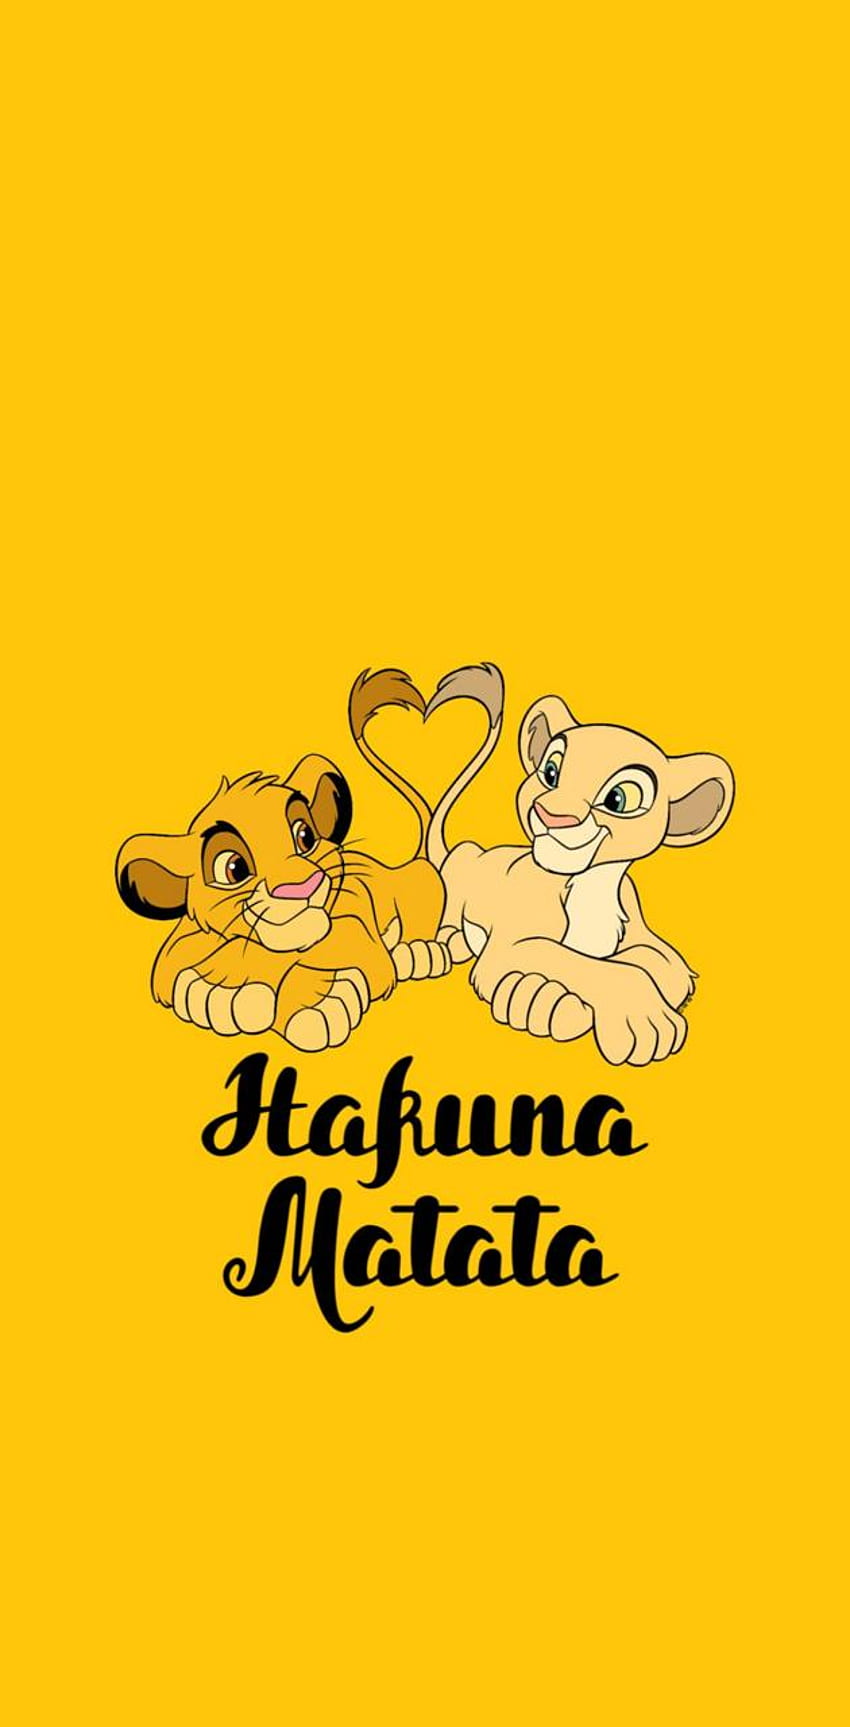 Lion king phone wallpaper. Hakuna matata. Simba and nala - Lion